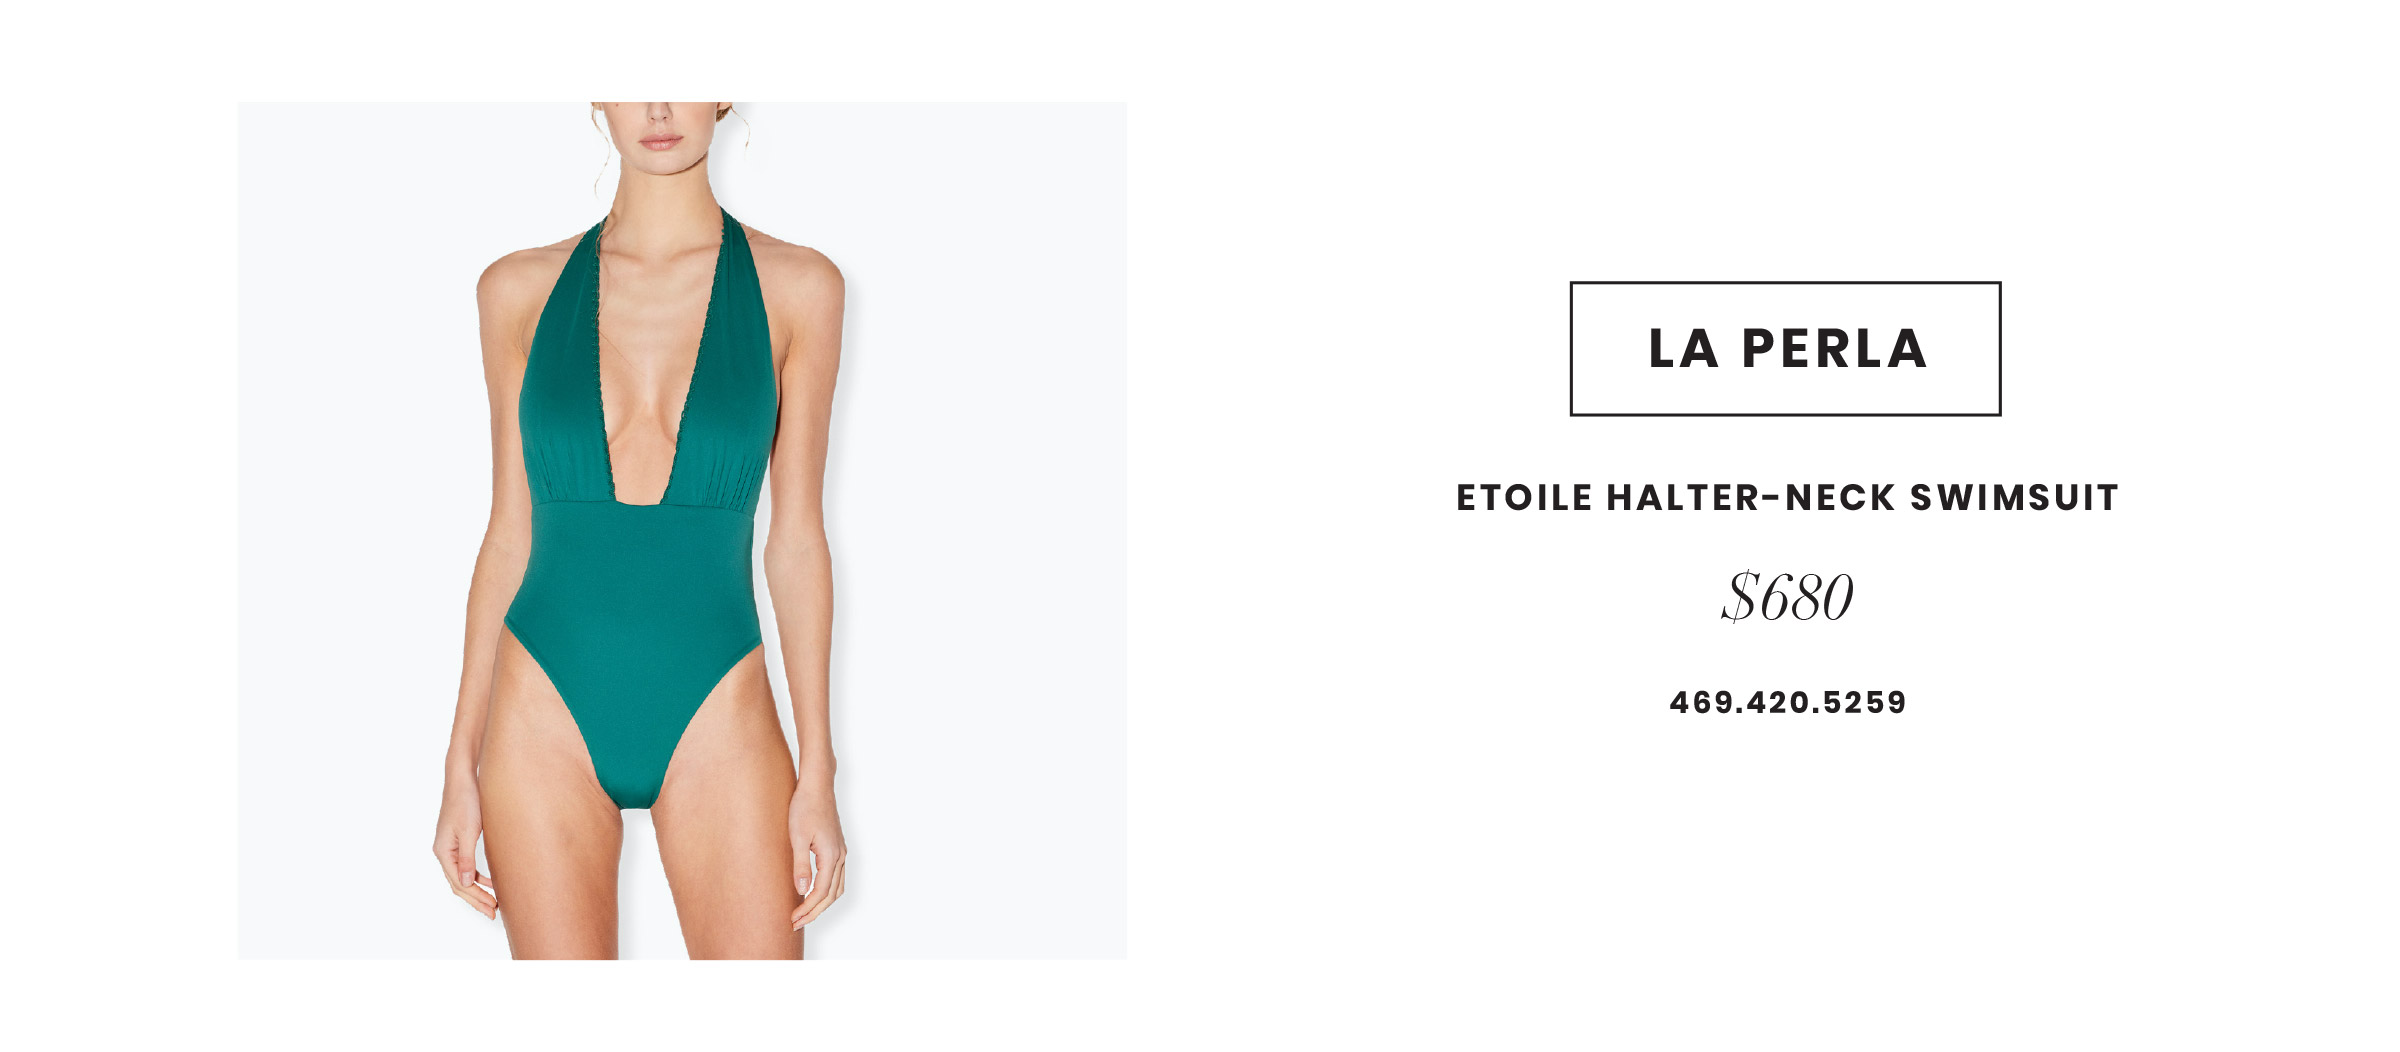 La Perla 露背領連體泳衣純綠色